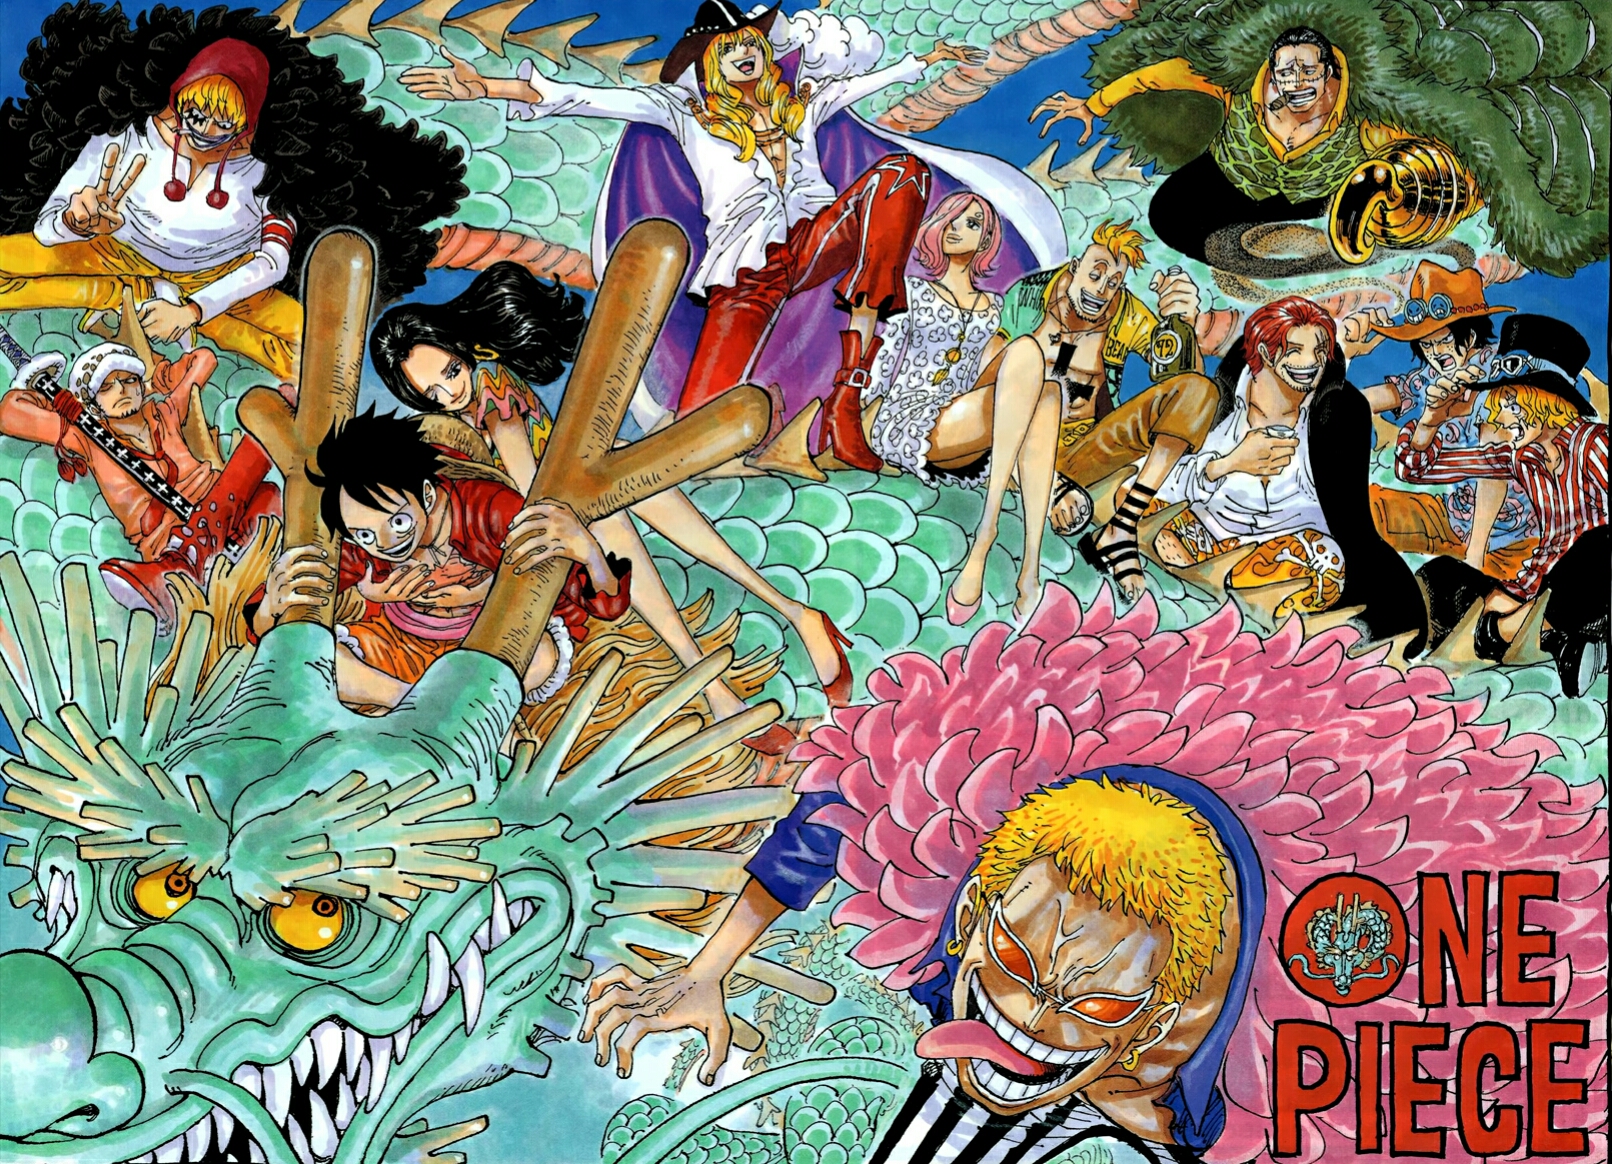 one piece - One Piece Wallpaper (40844097) - Fanpop - Page 57